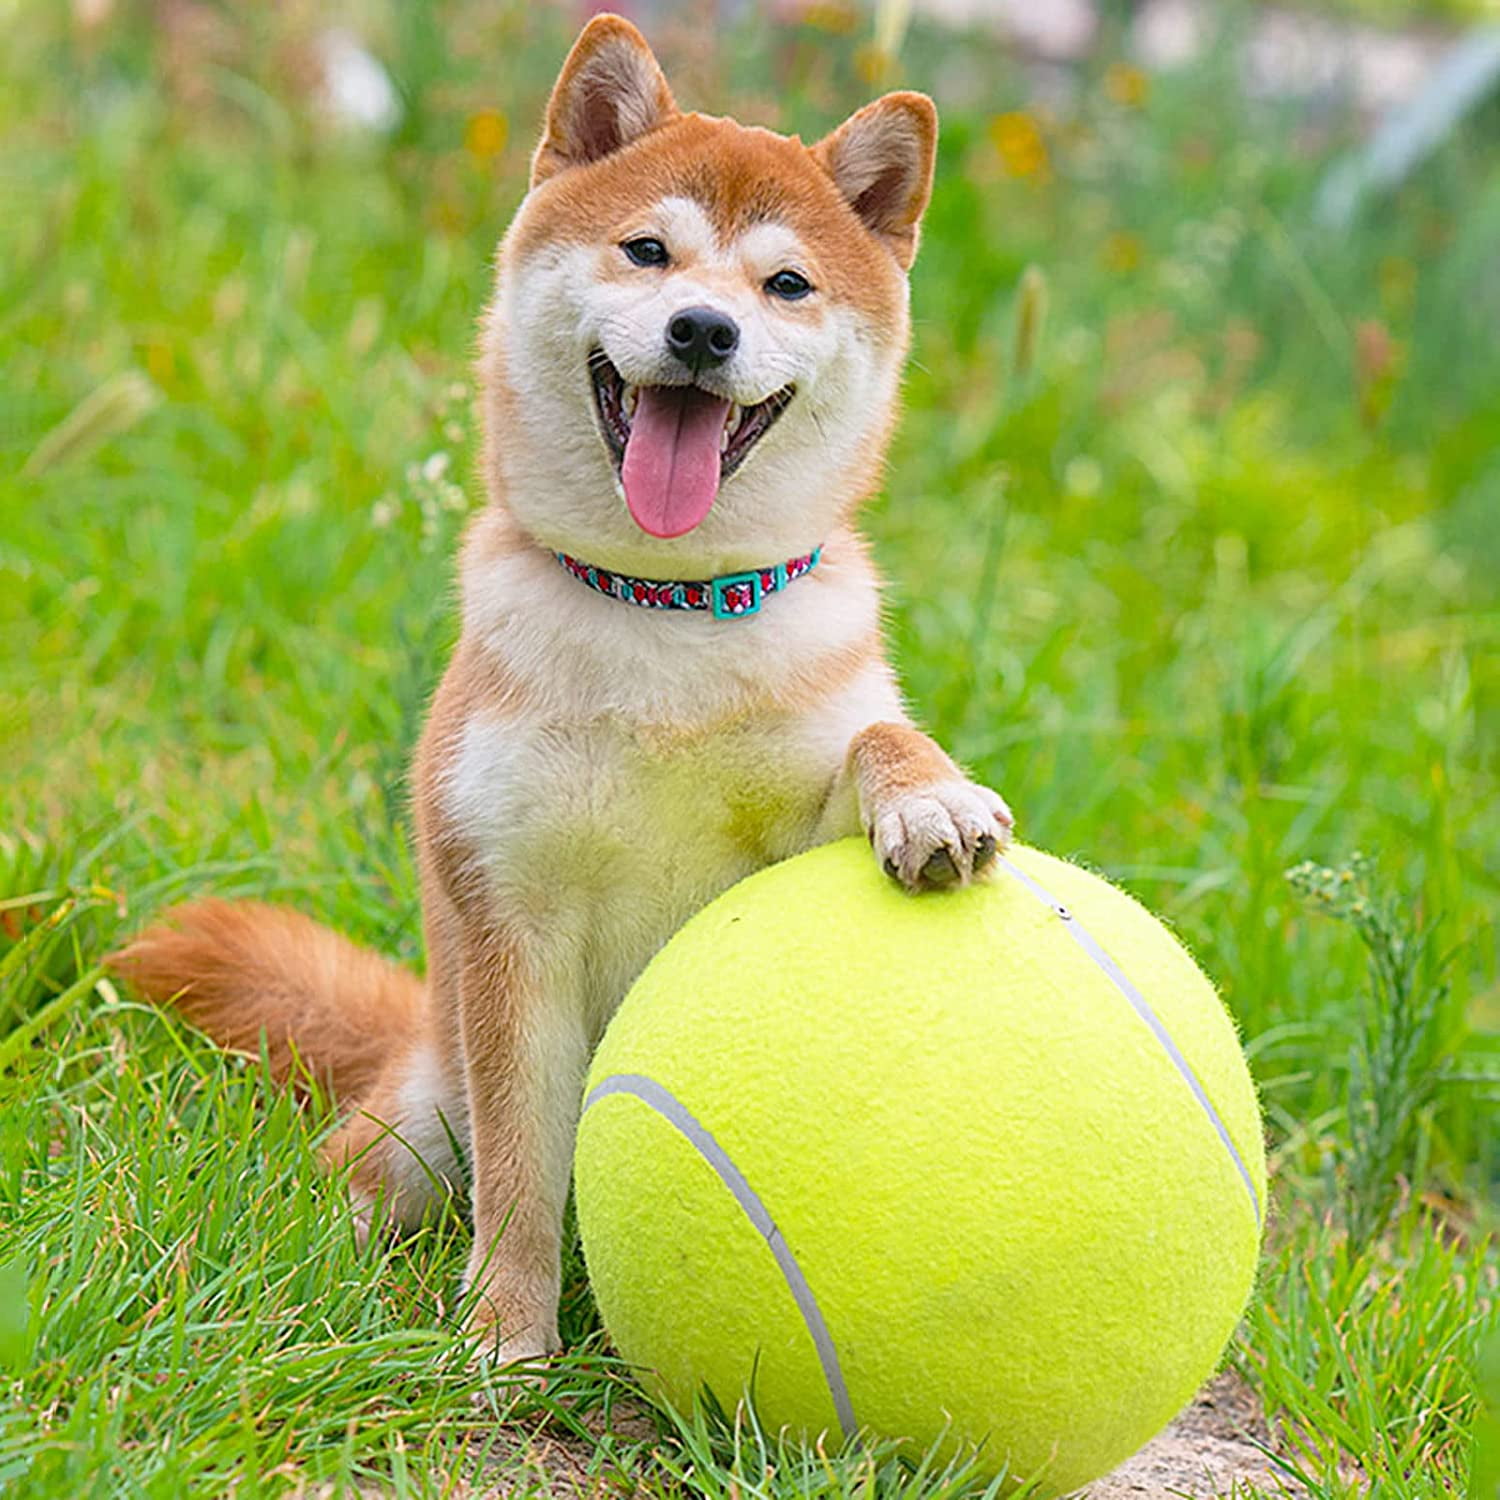 9.5" Oversize Giant Tennis Ball Pet Dog Puppy Toys Dog Fun Outdoor Sports 